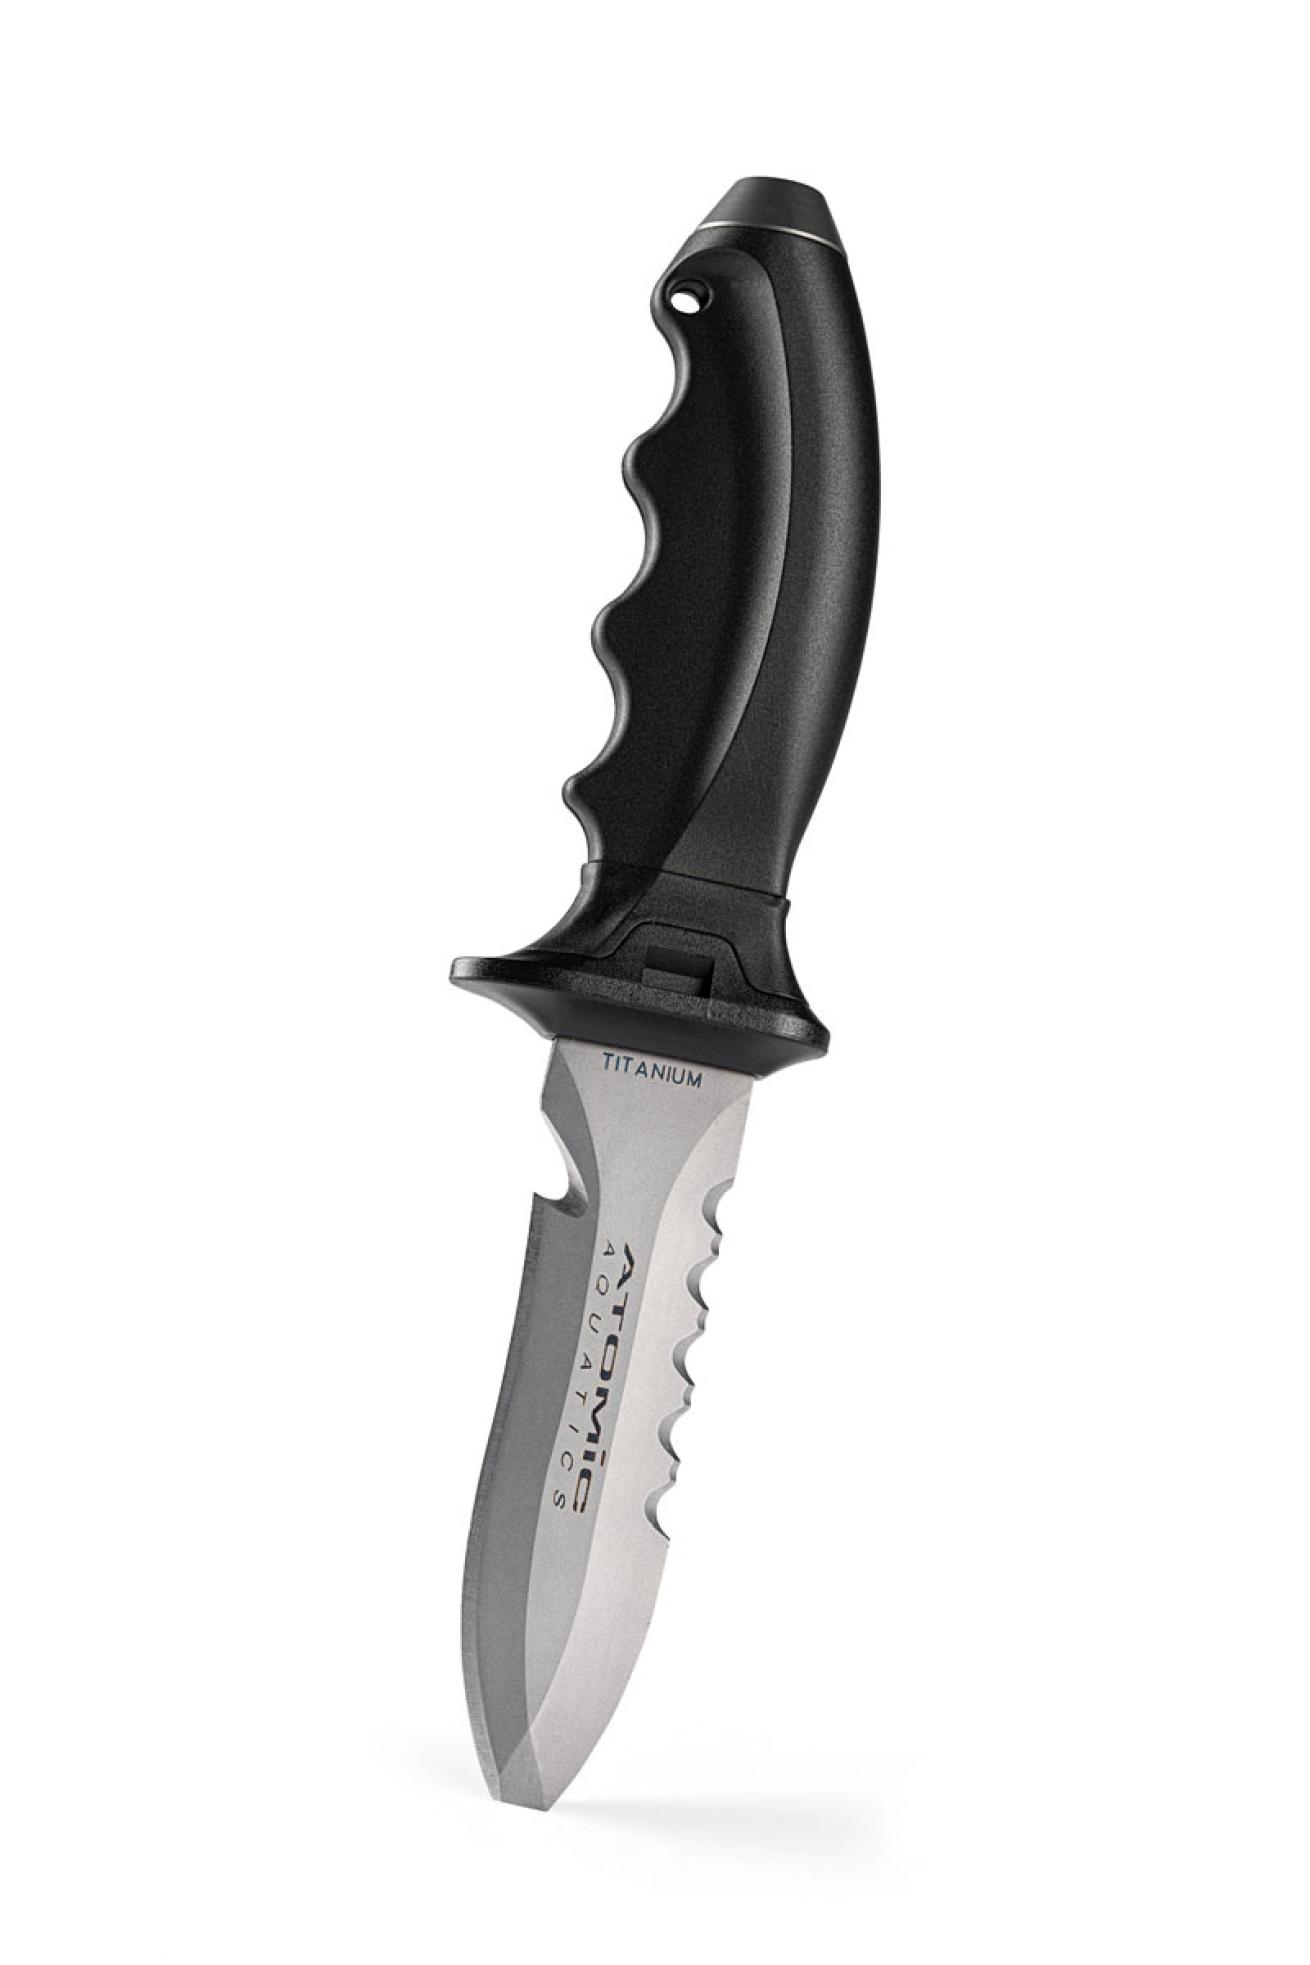 Palantic BETA Titanium 5 Blade Heavy Duty Blunt Tip Dive Knife w/Straps -  scubachoice